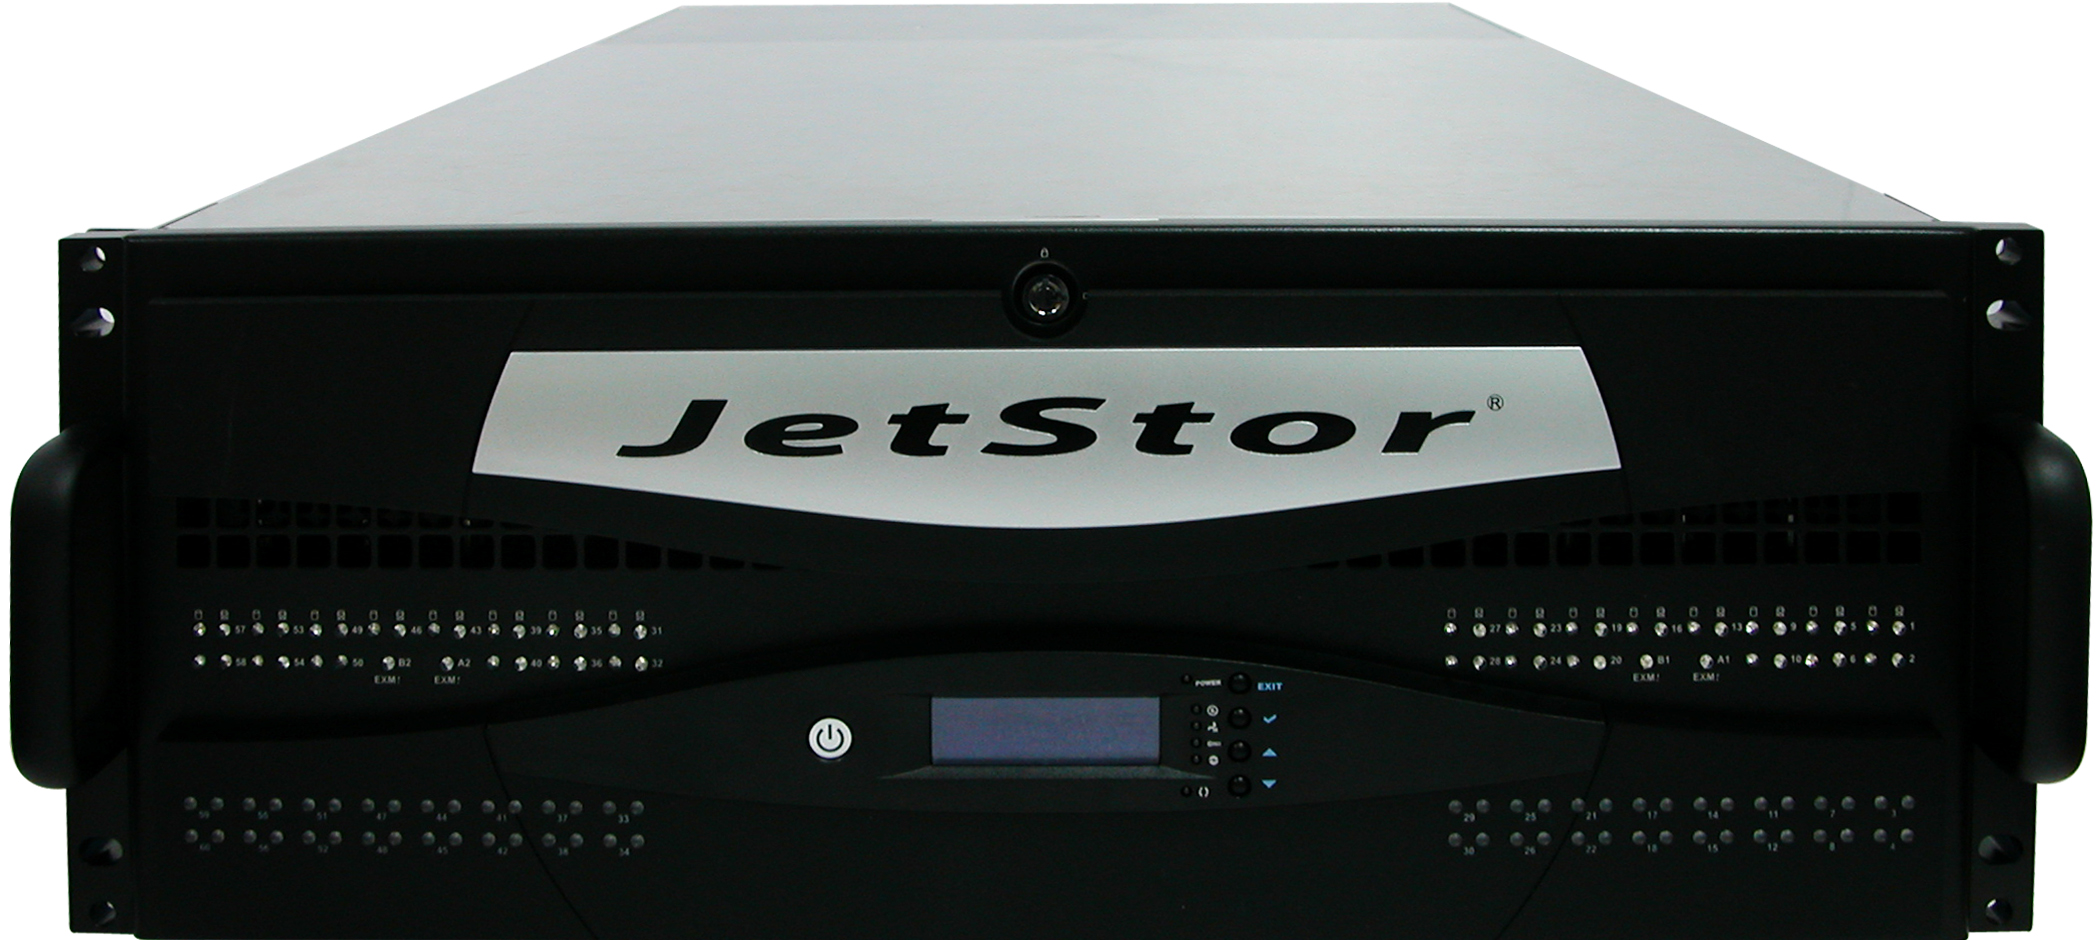 JetStor High Density RAID Storage